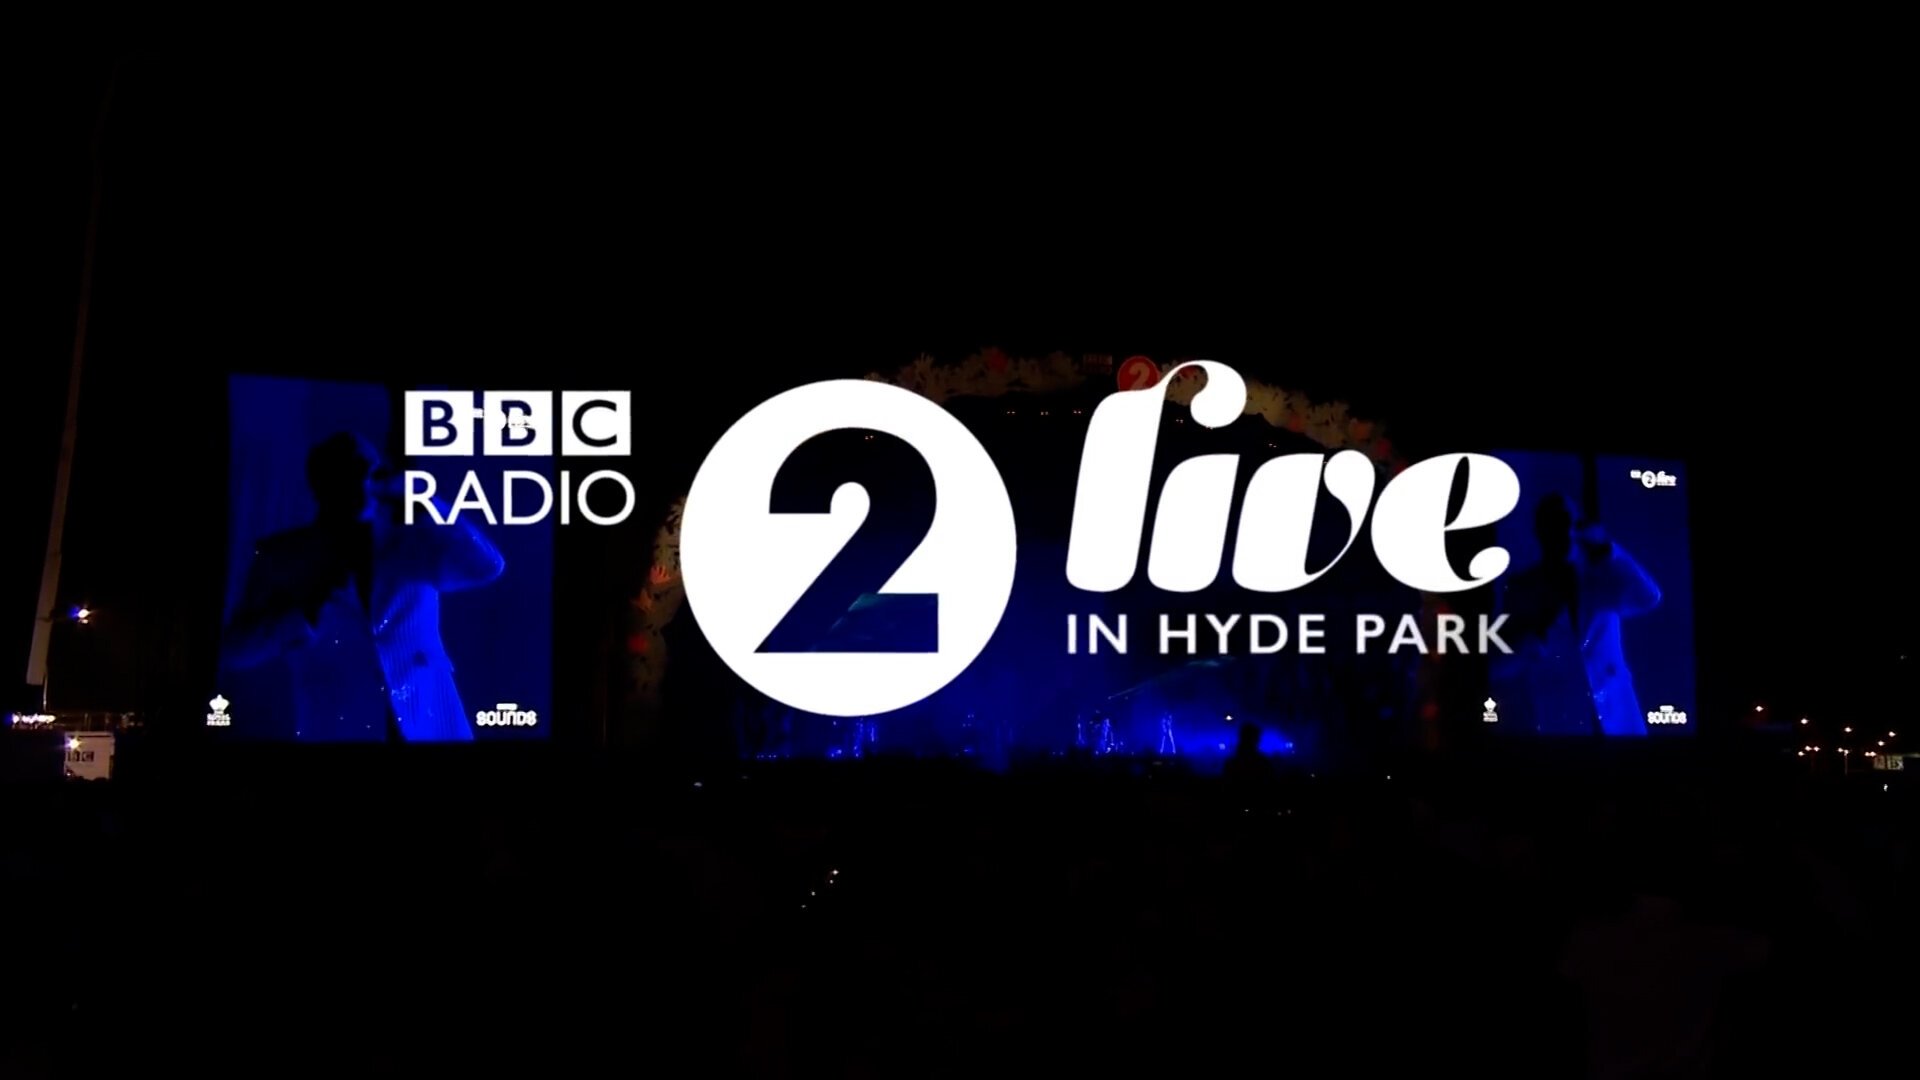 BBC RADIO 2 IN HYDE PARK